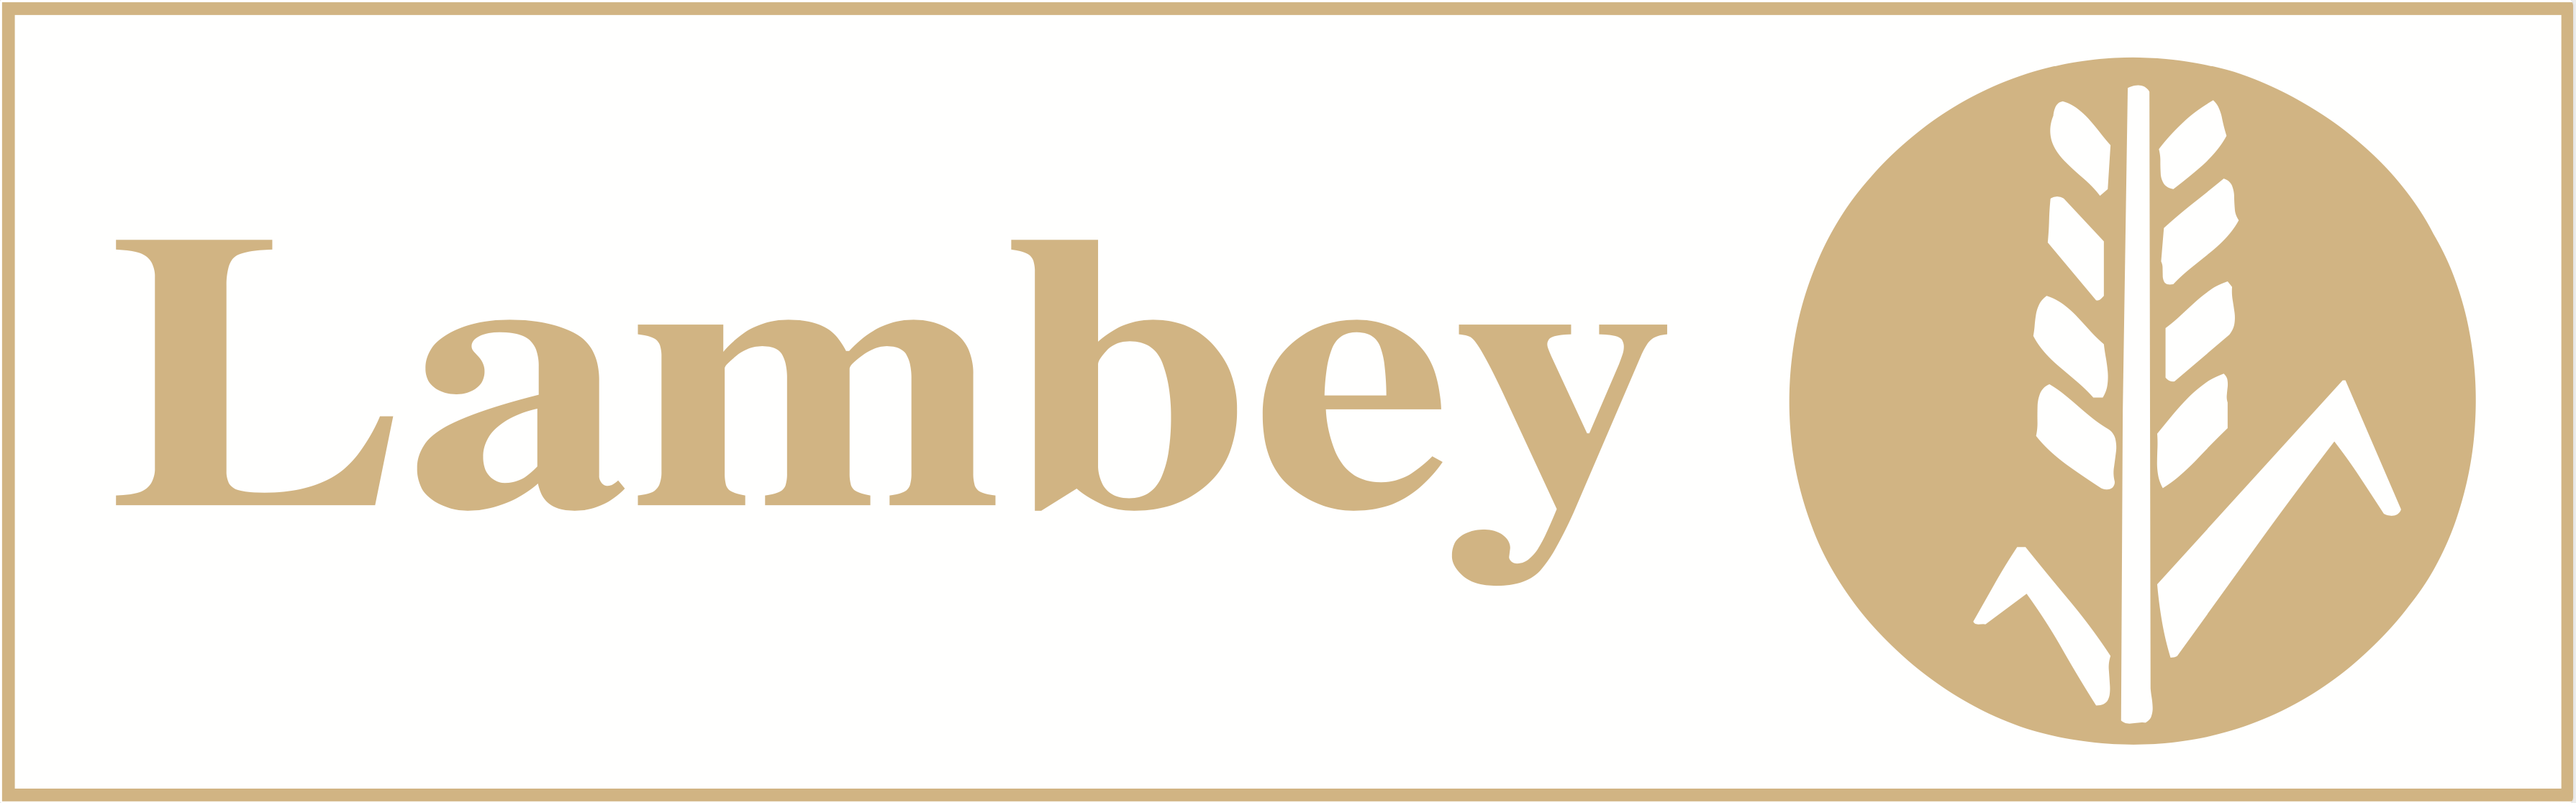 Logo lambey